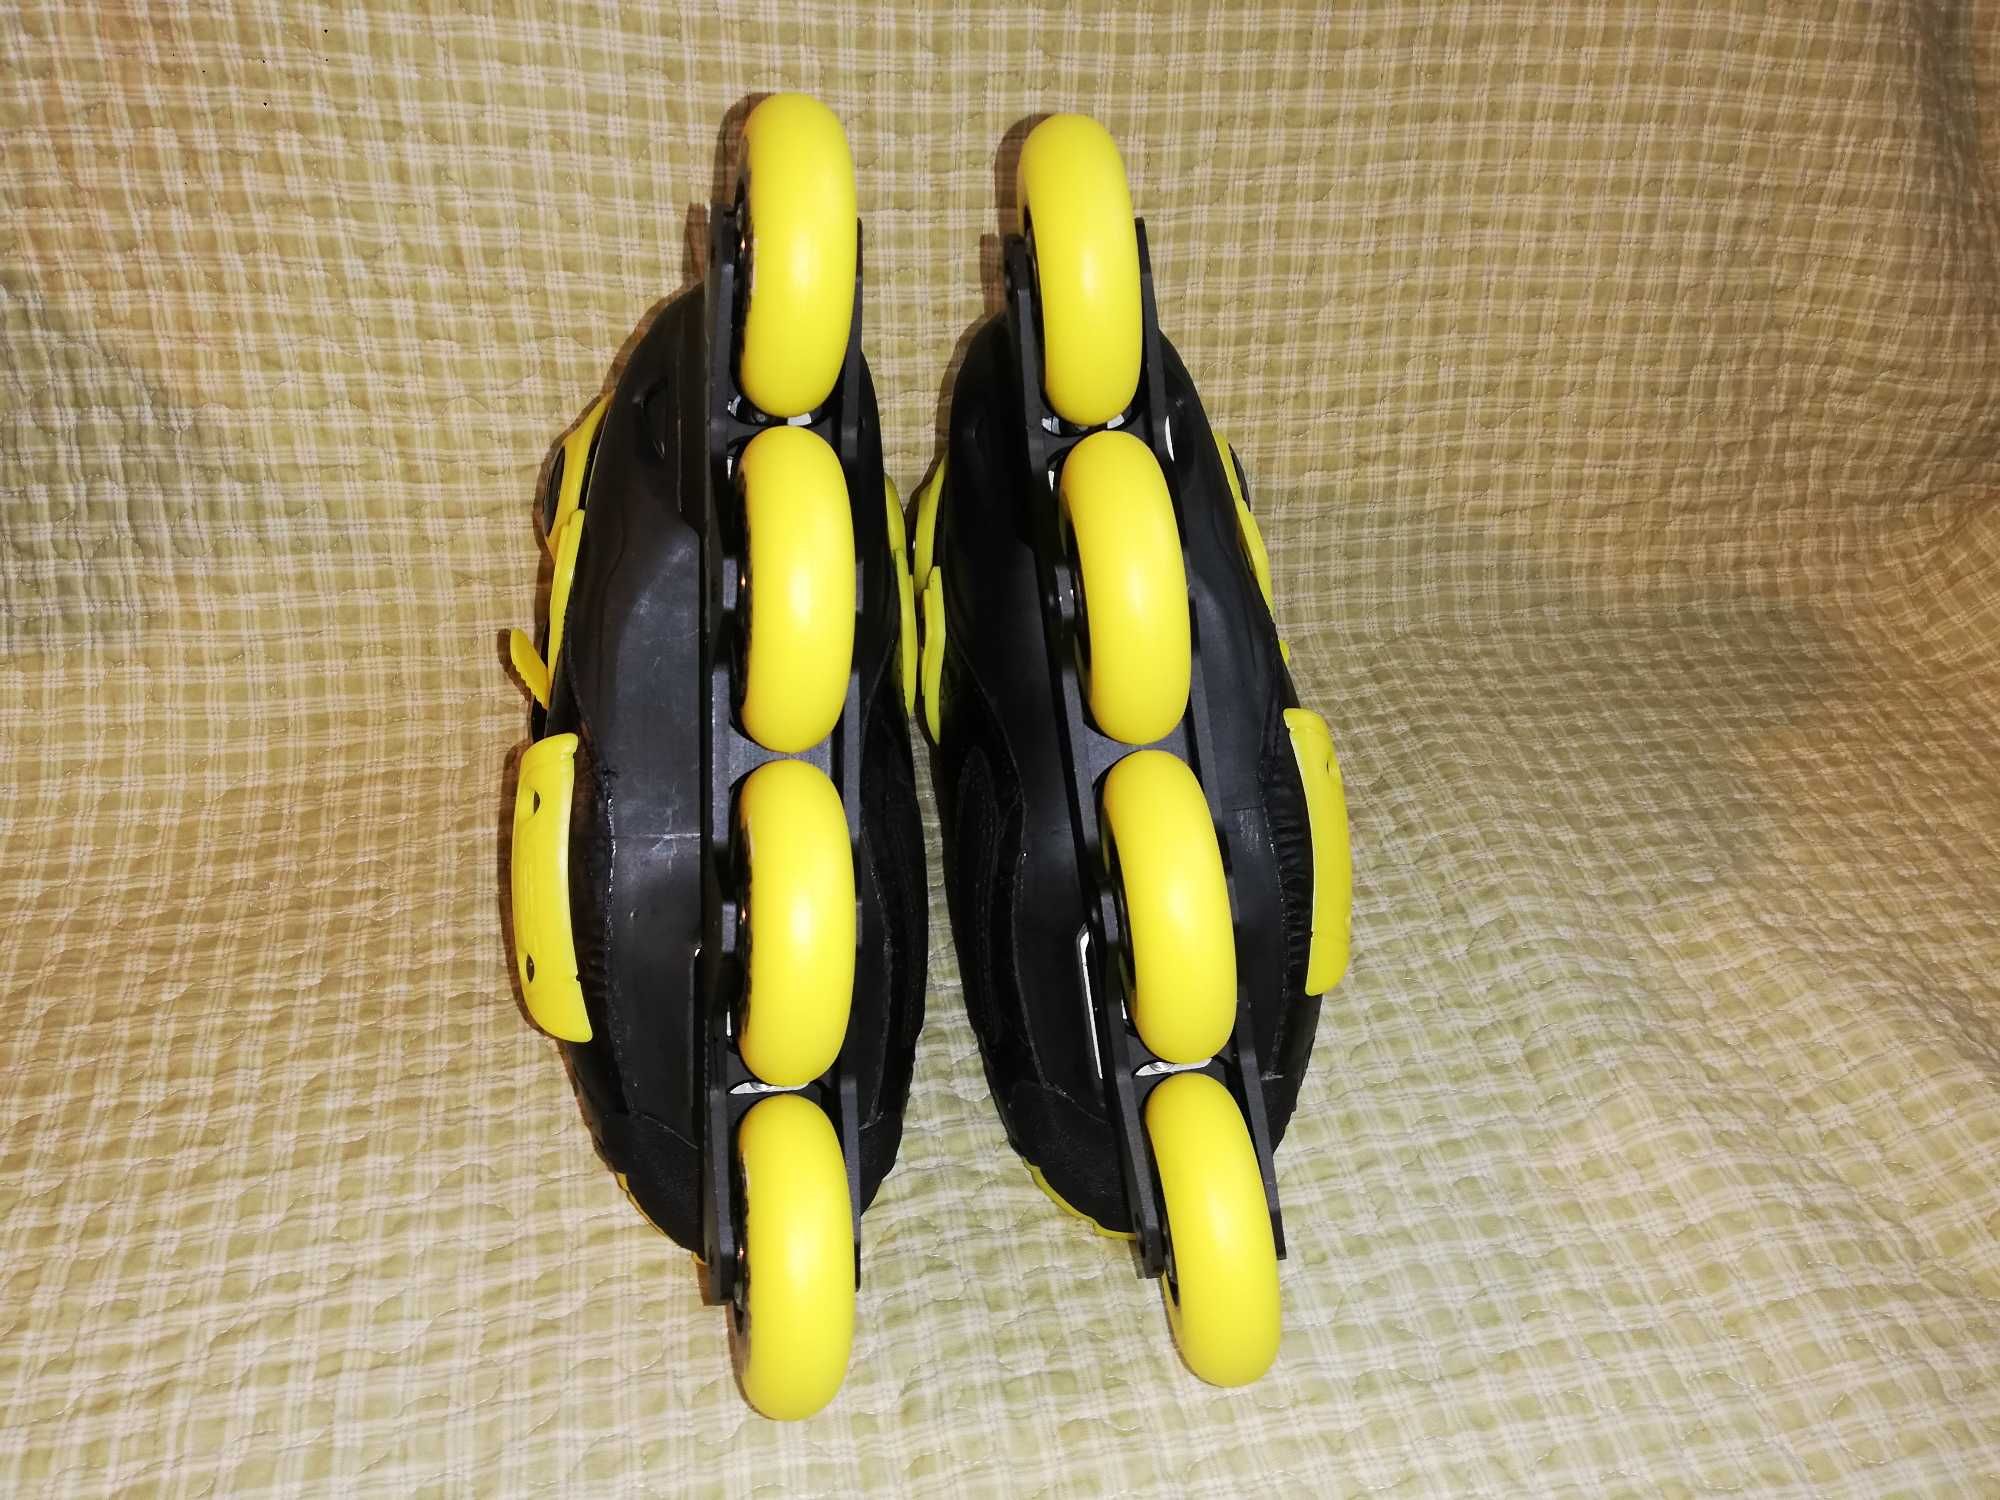 NOWE rolki slalom banan SEBA HIGH DELUXE rozmiar 40 czarno żółte